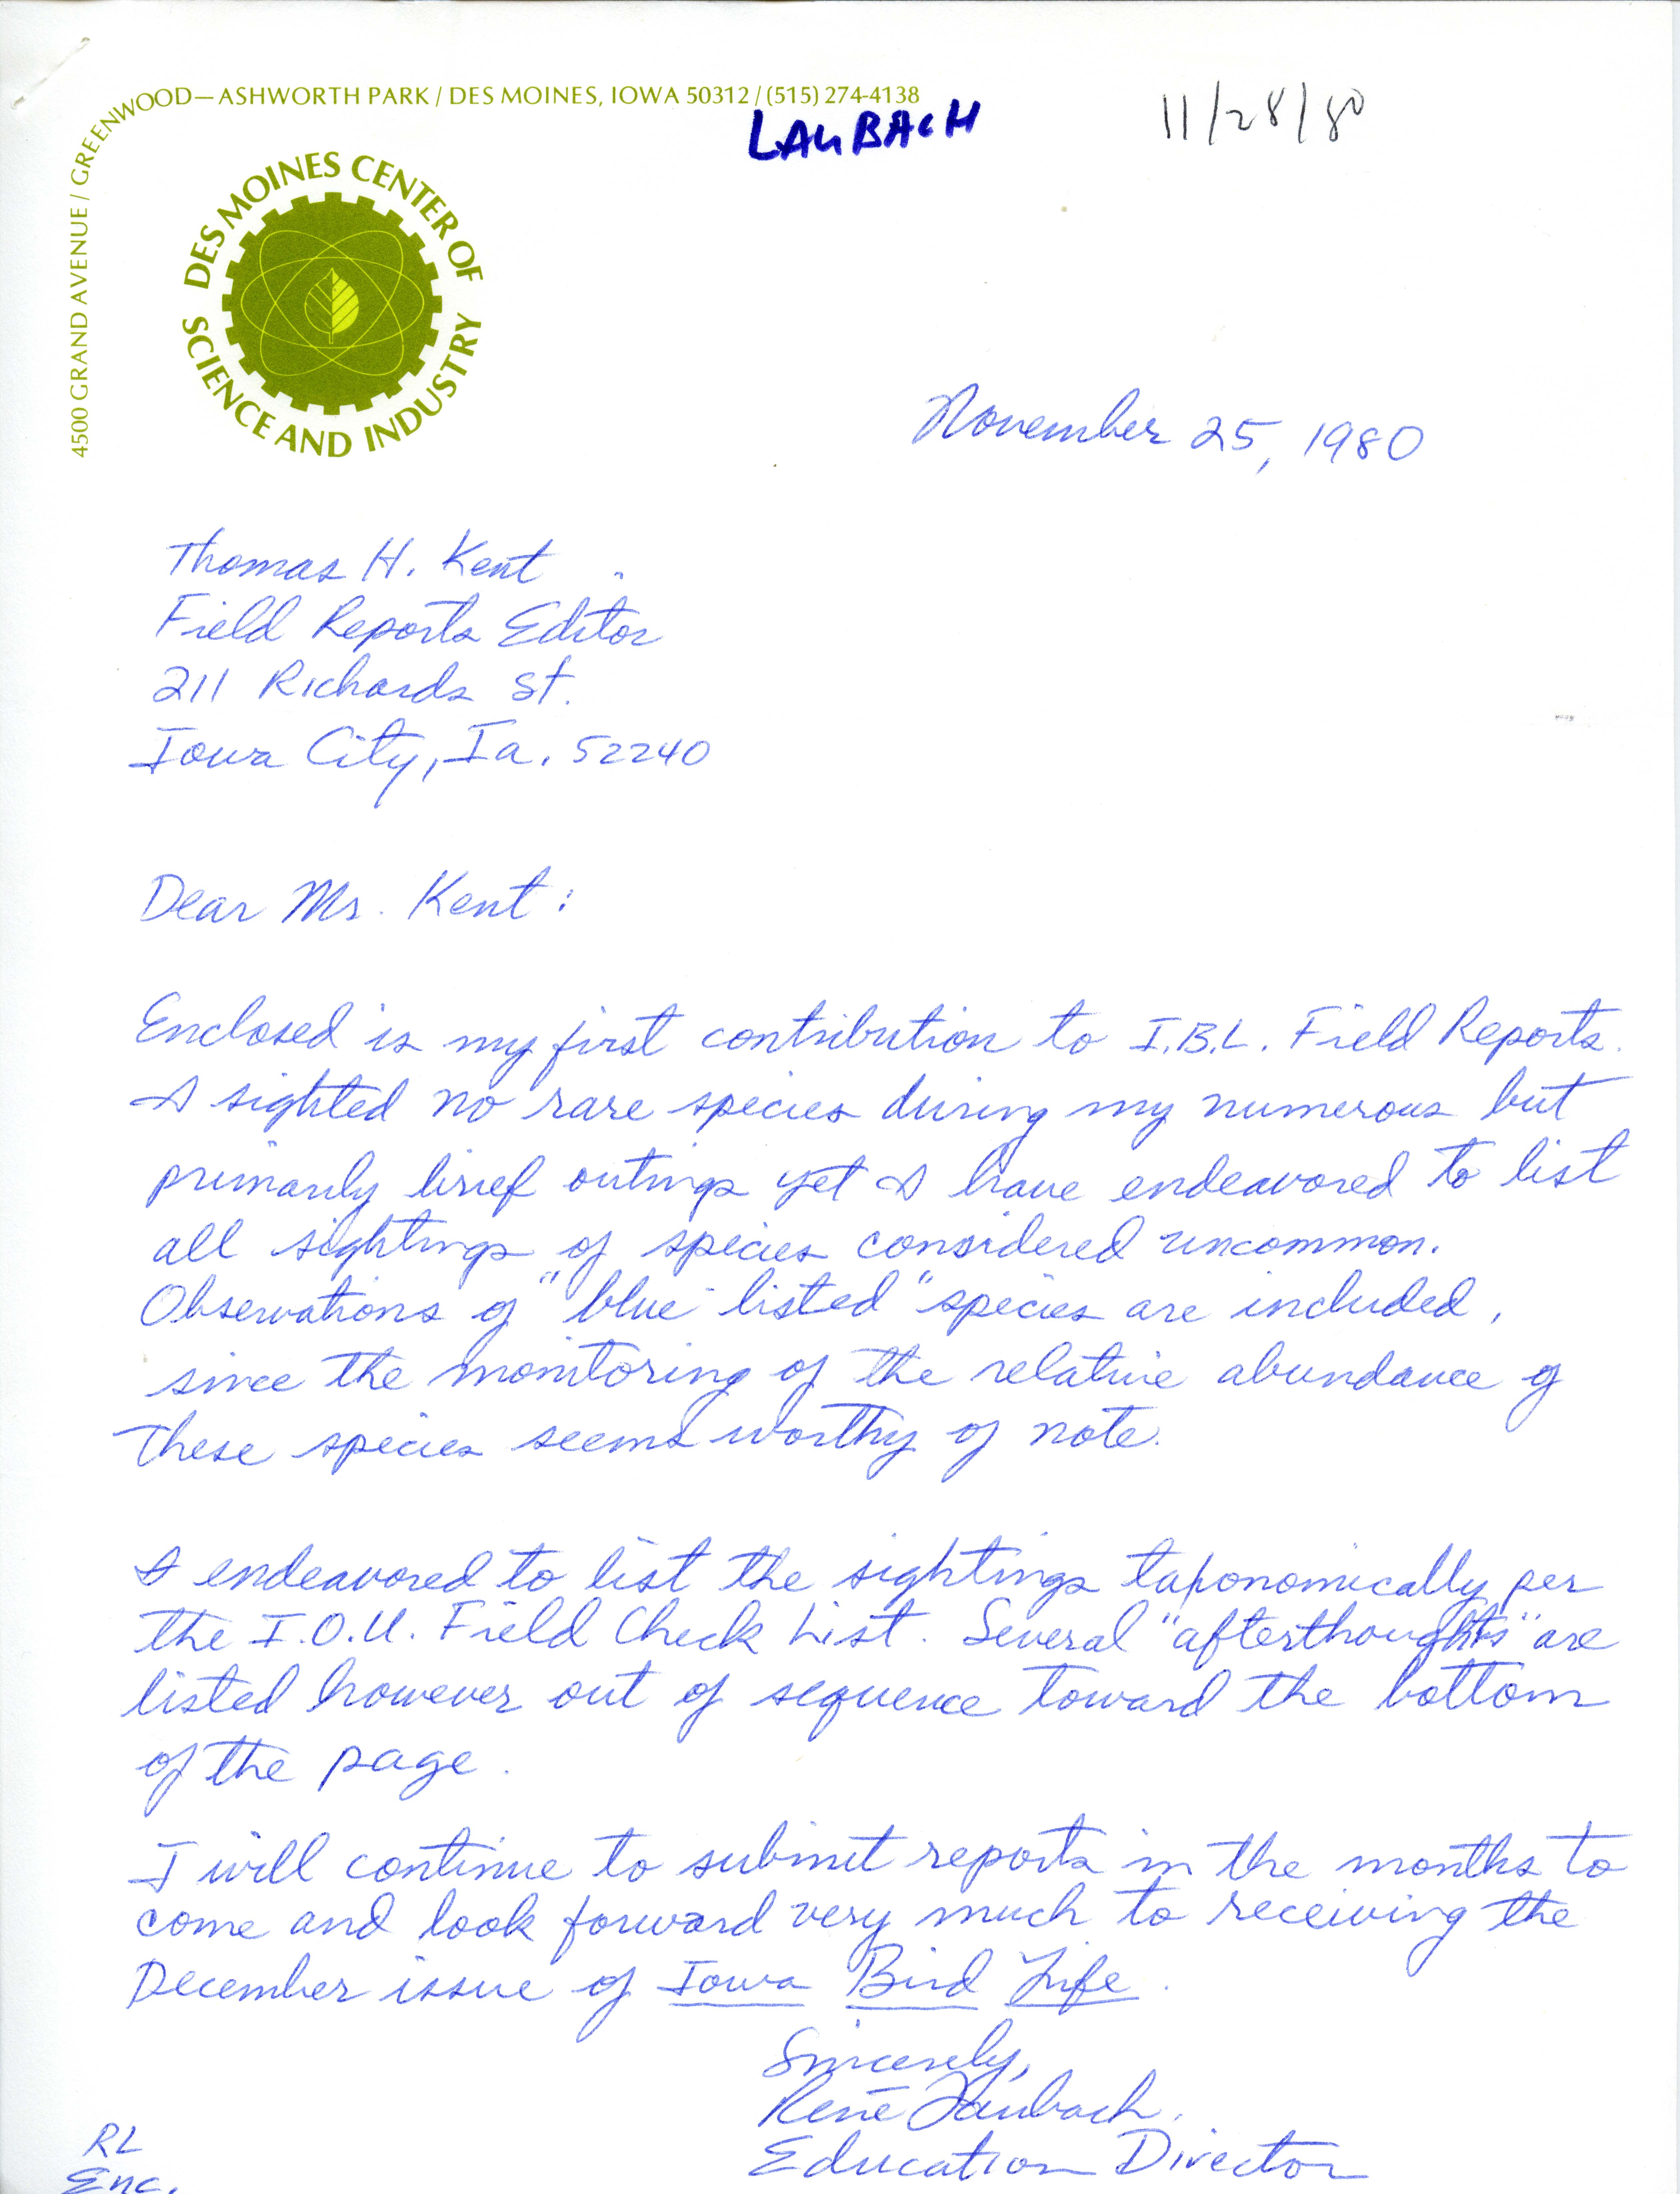 Rene Laubach letter to Thomas H. Kent regarding bird sightings, November 25, 1980